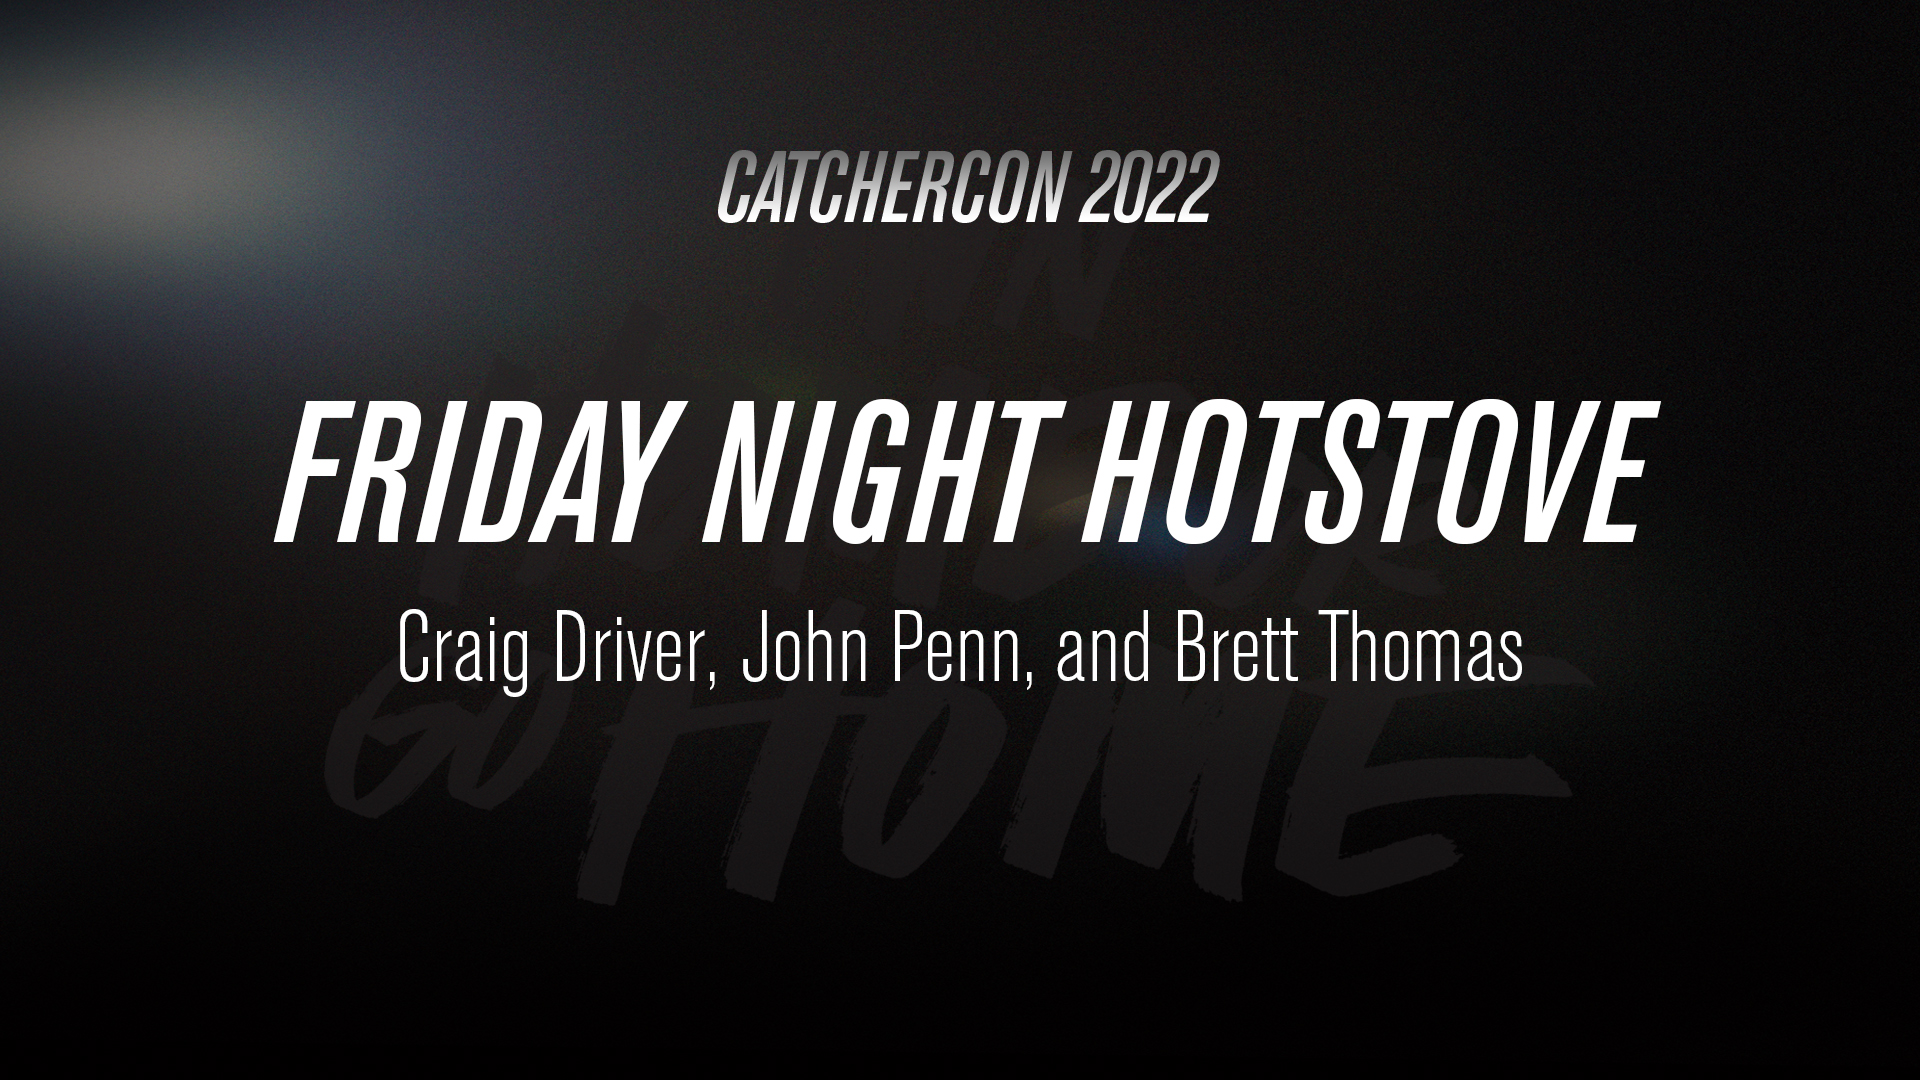 Friday Night Hotstove | CatcherCON 2022